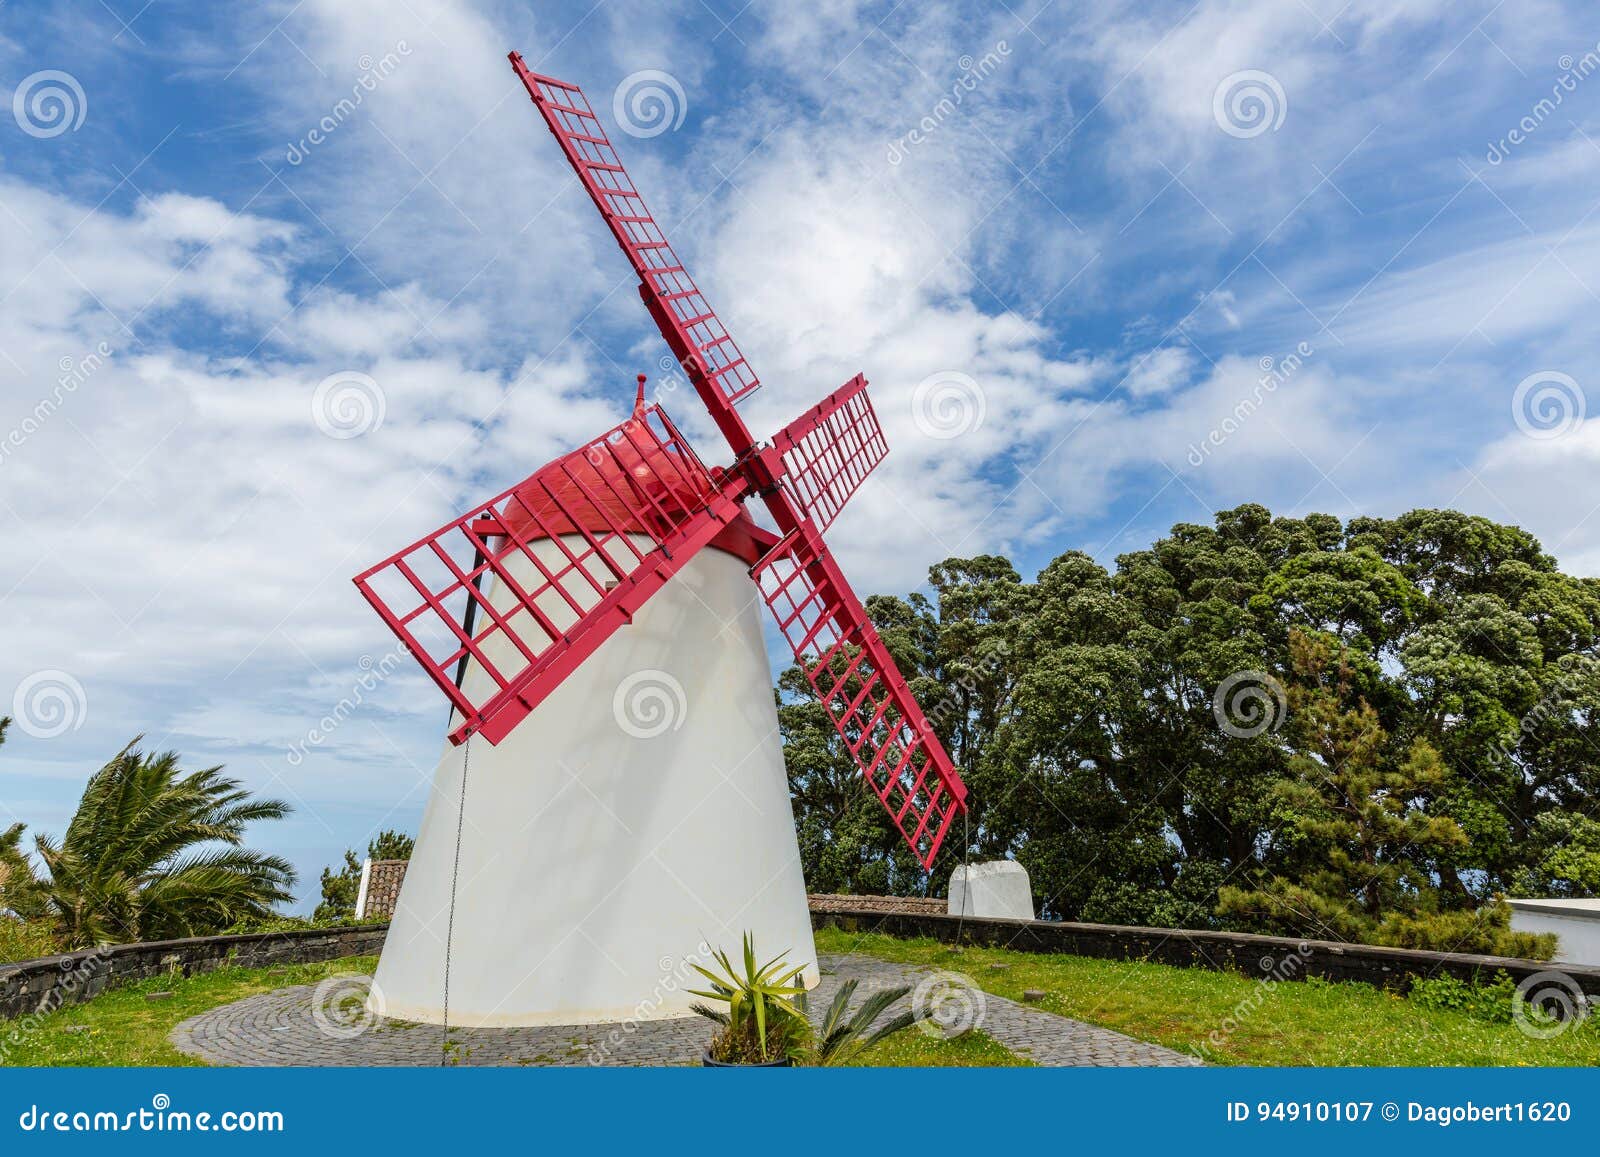 pico vermelho windmill on the coast of sao miguel island